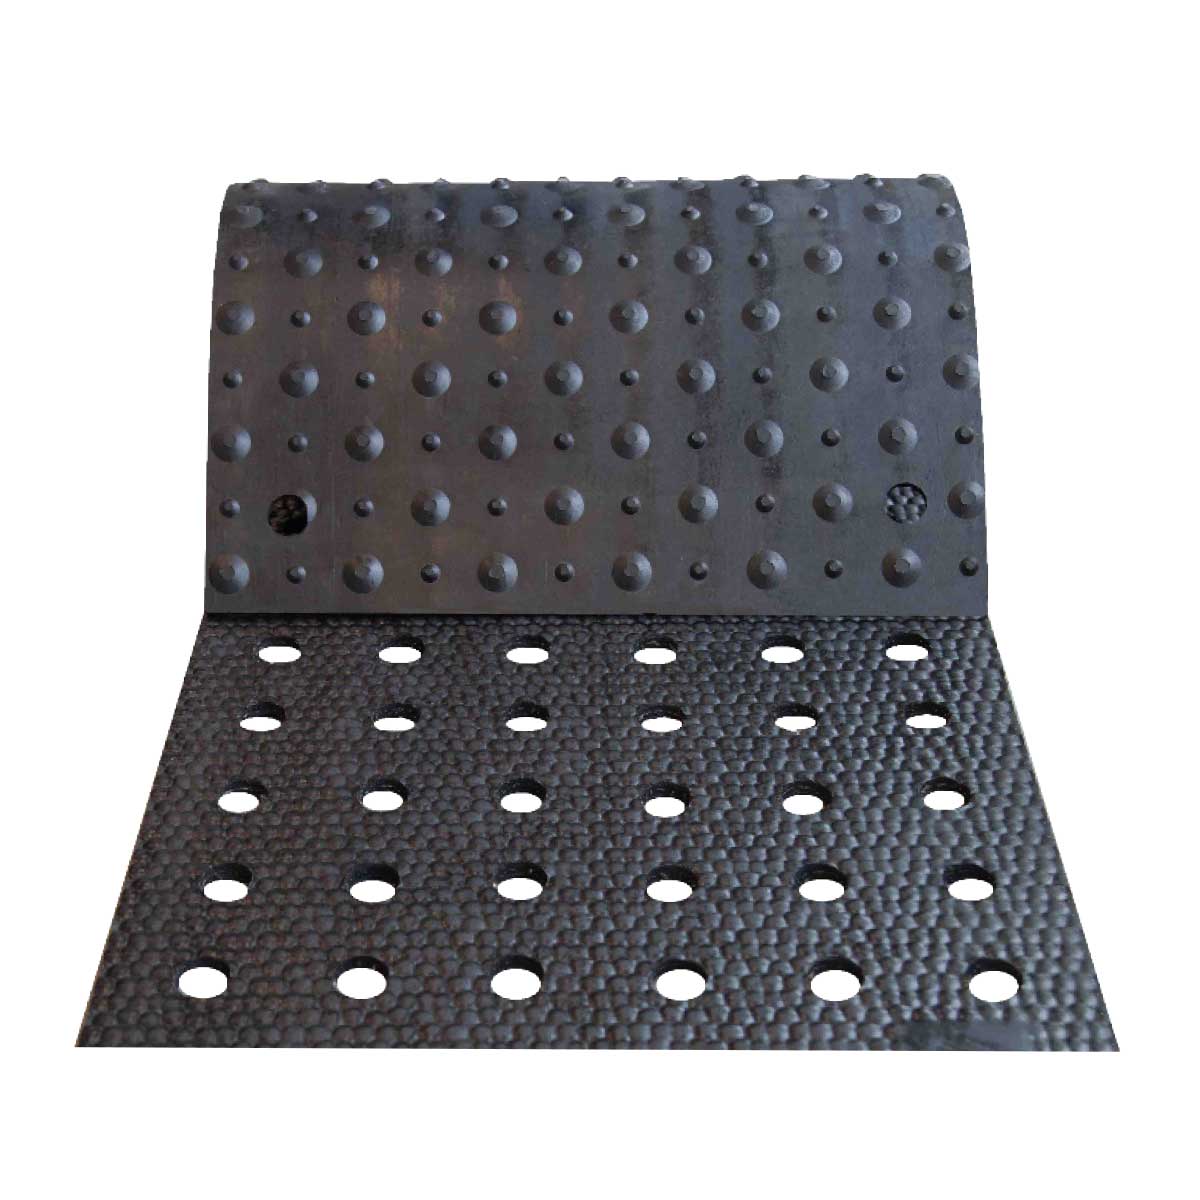 Split Saver rubber mat for sows